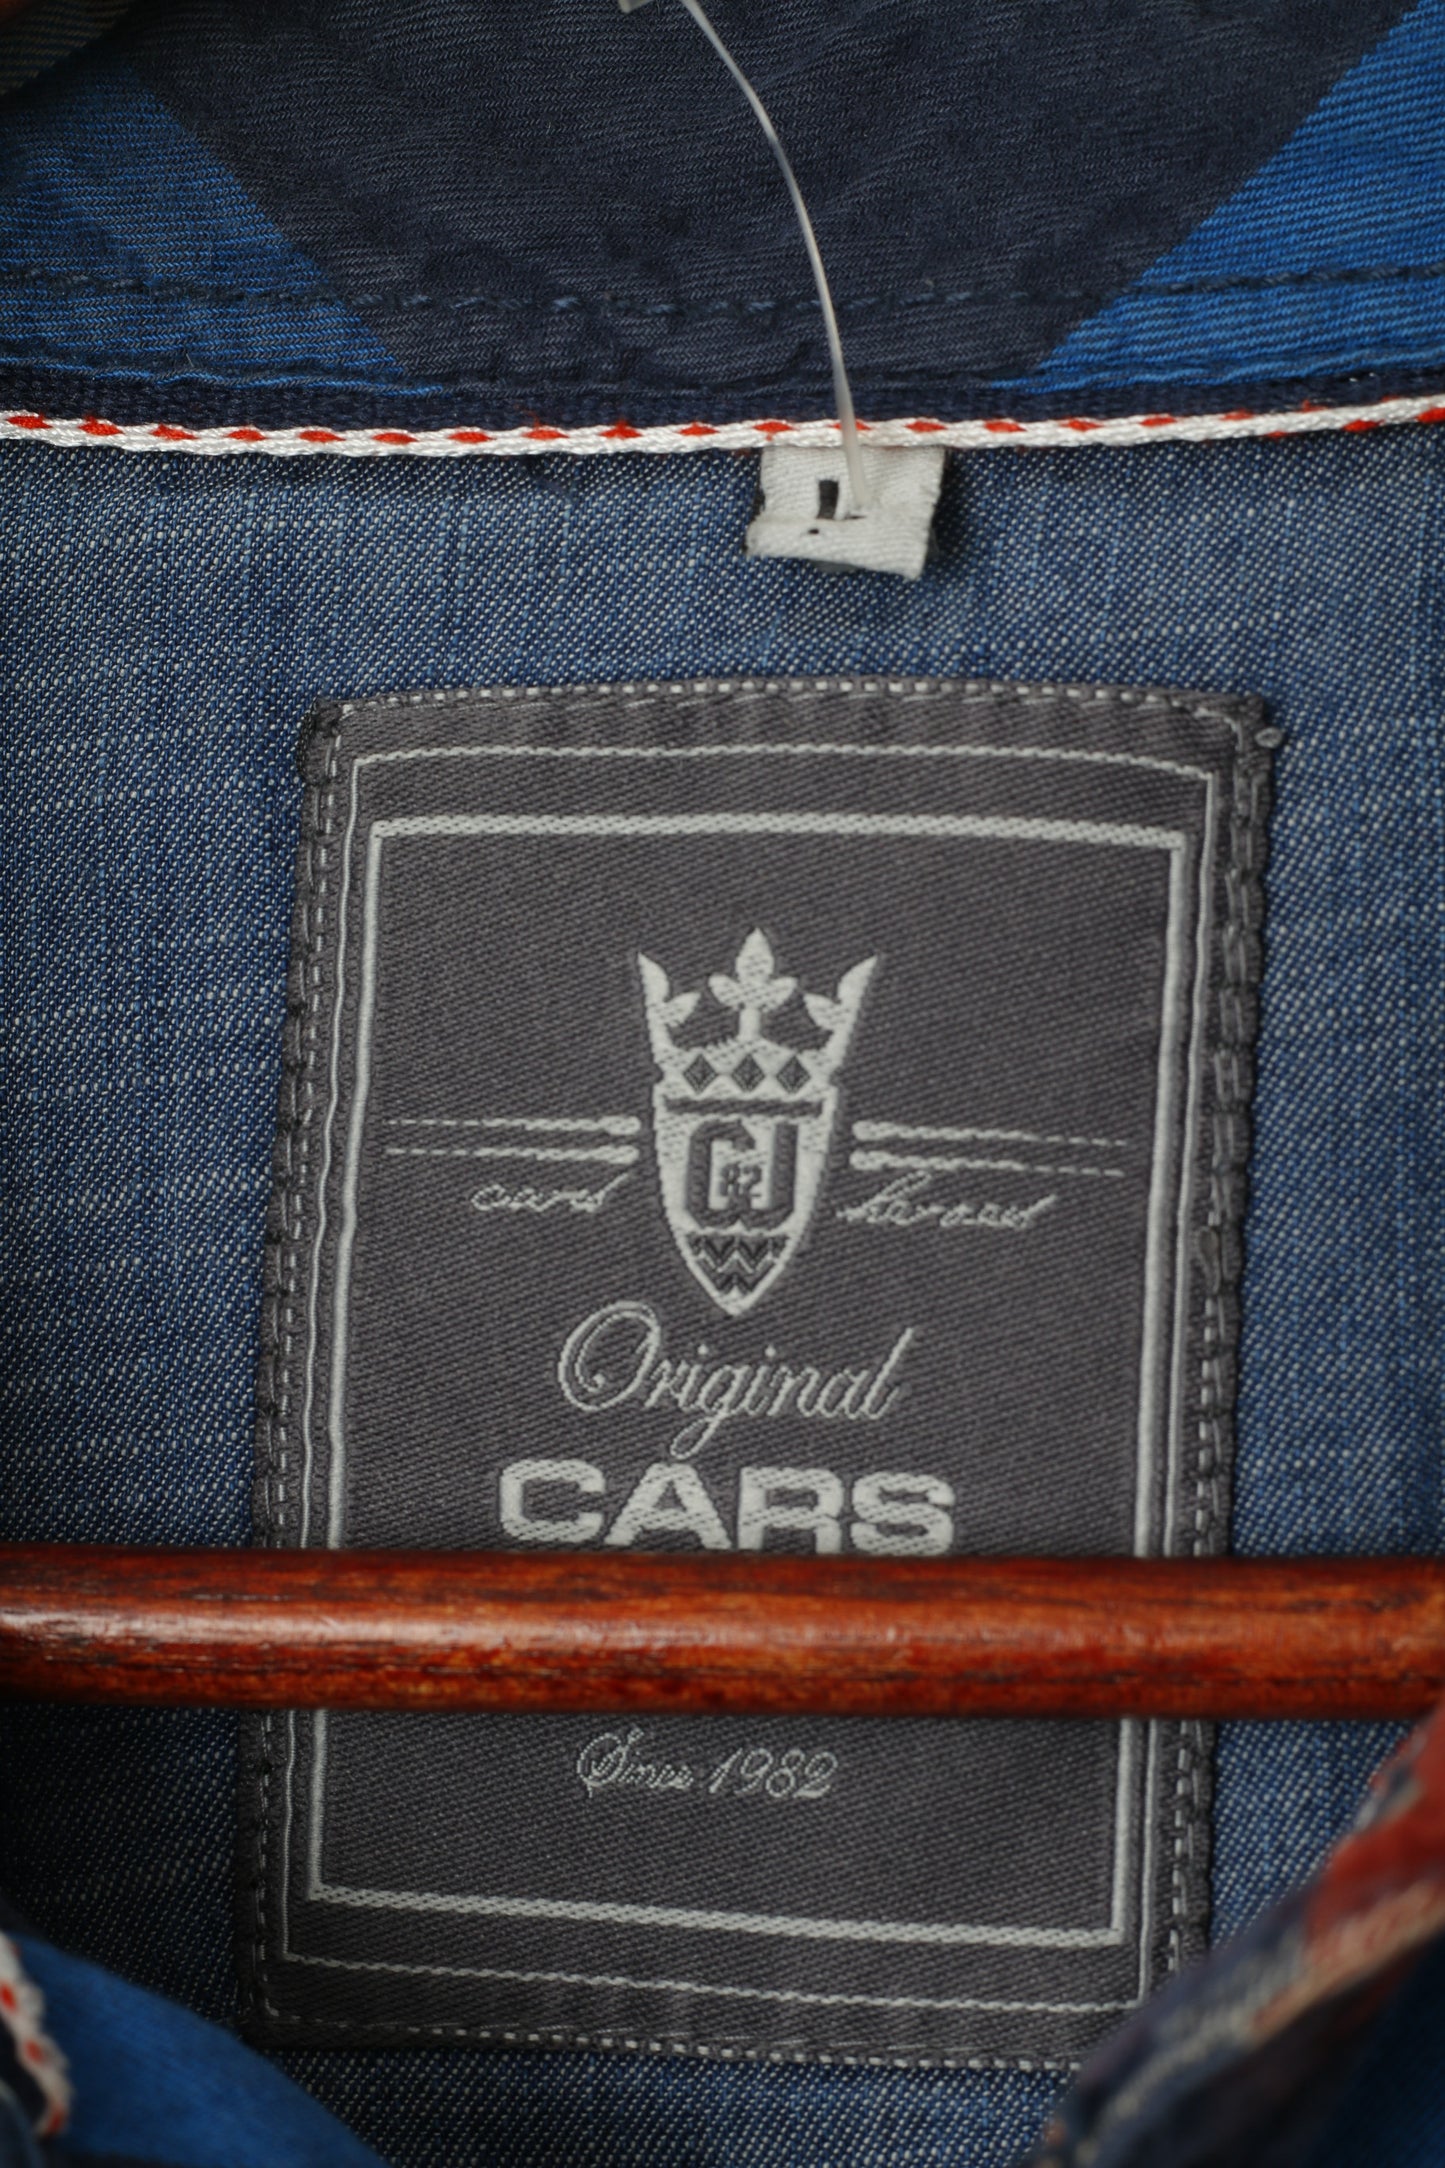 Cars Jeans Men L Casual Shirt Multi Colour Check Cotton Snap Pocket Long Sleeve Top